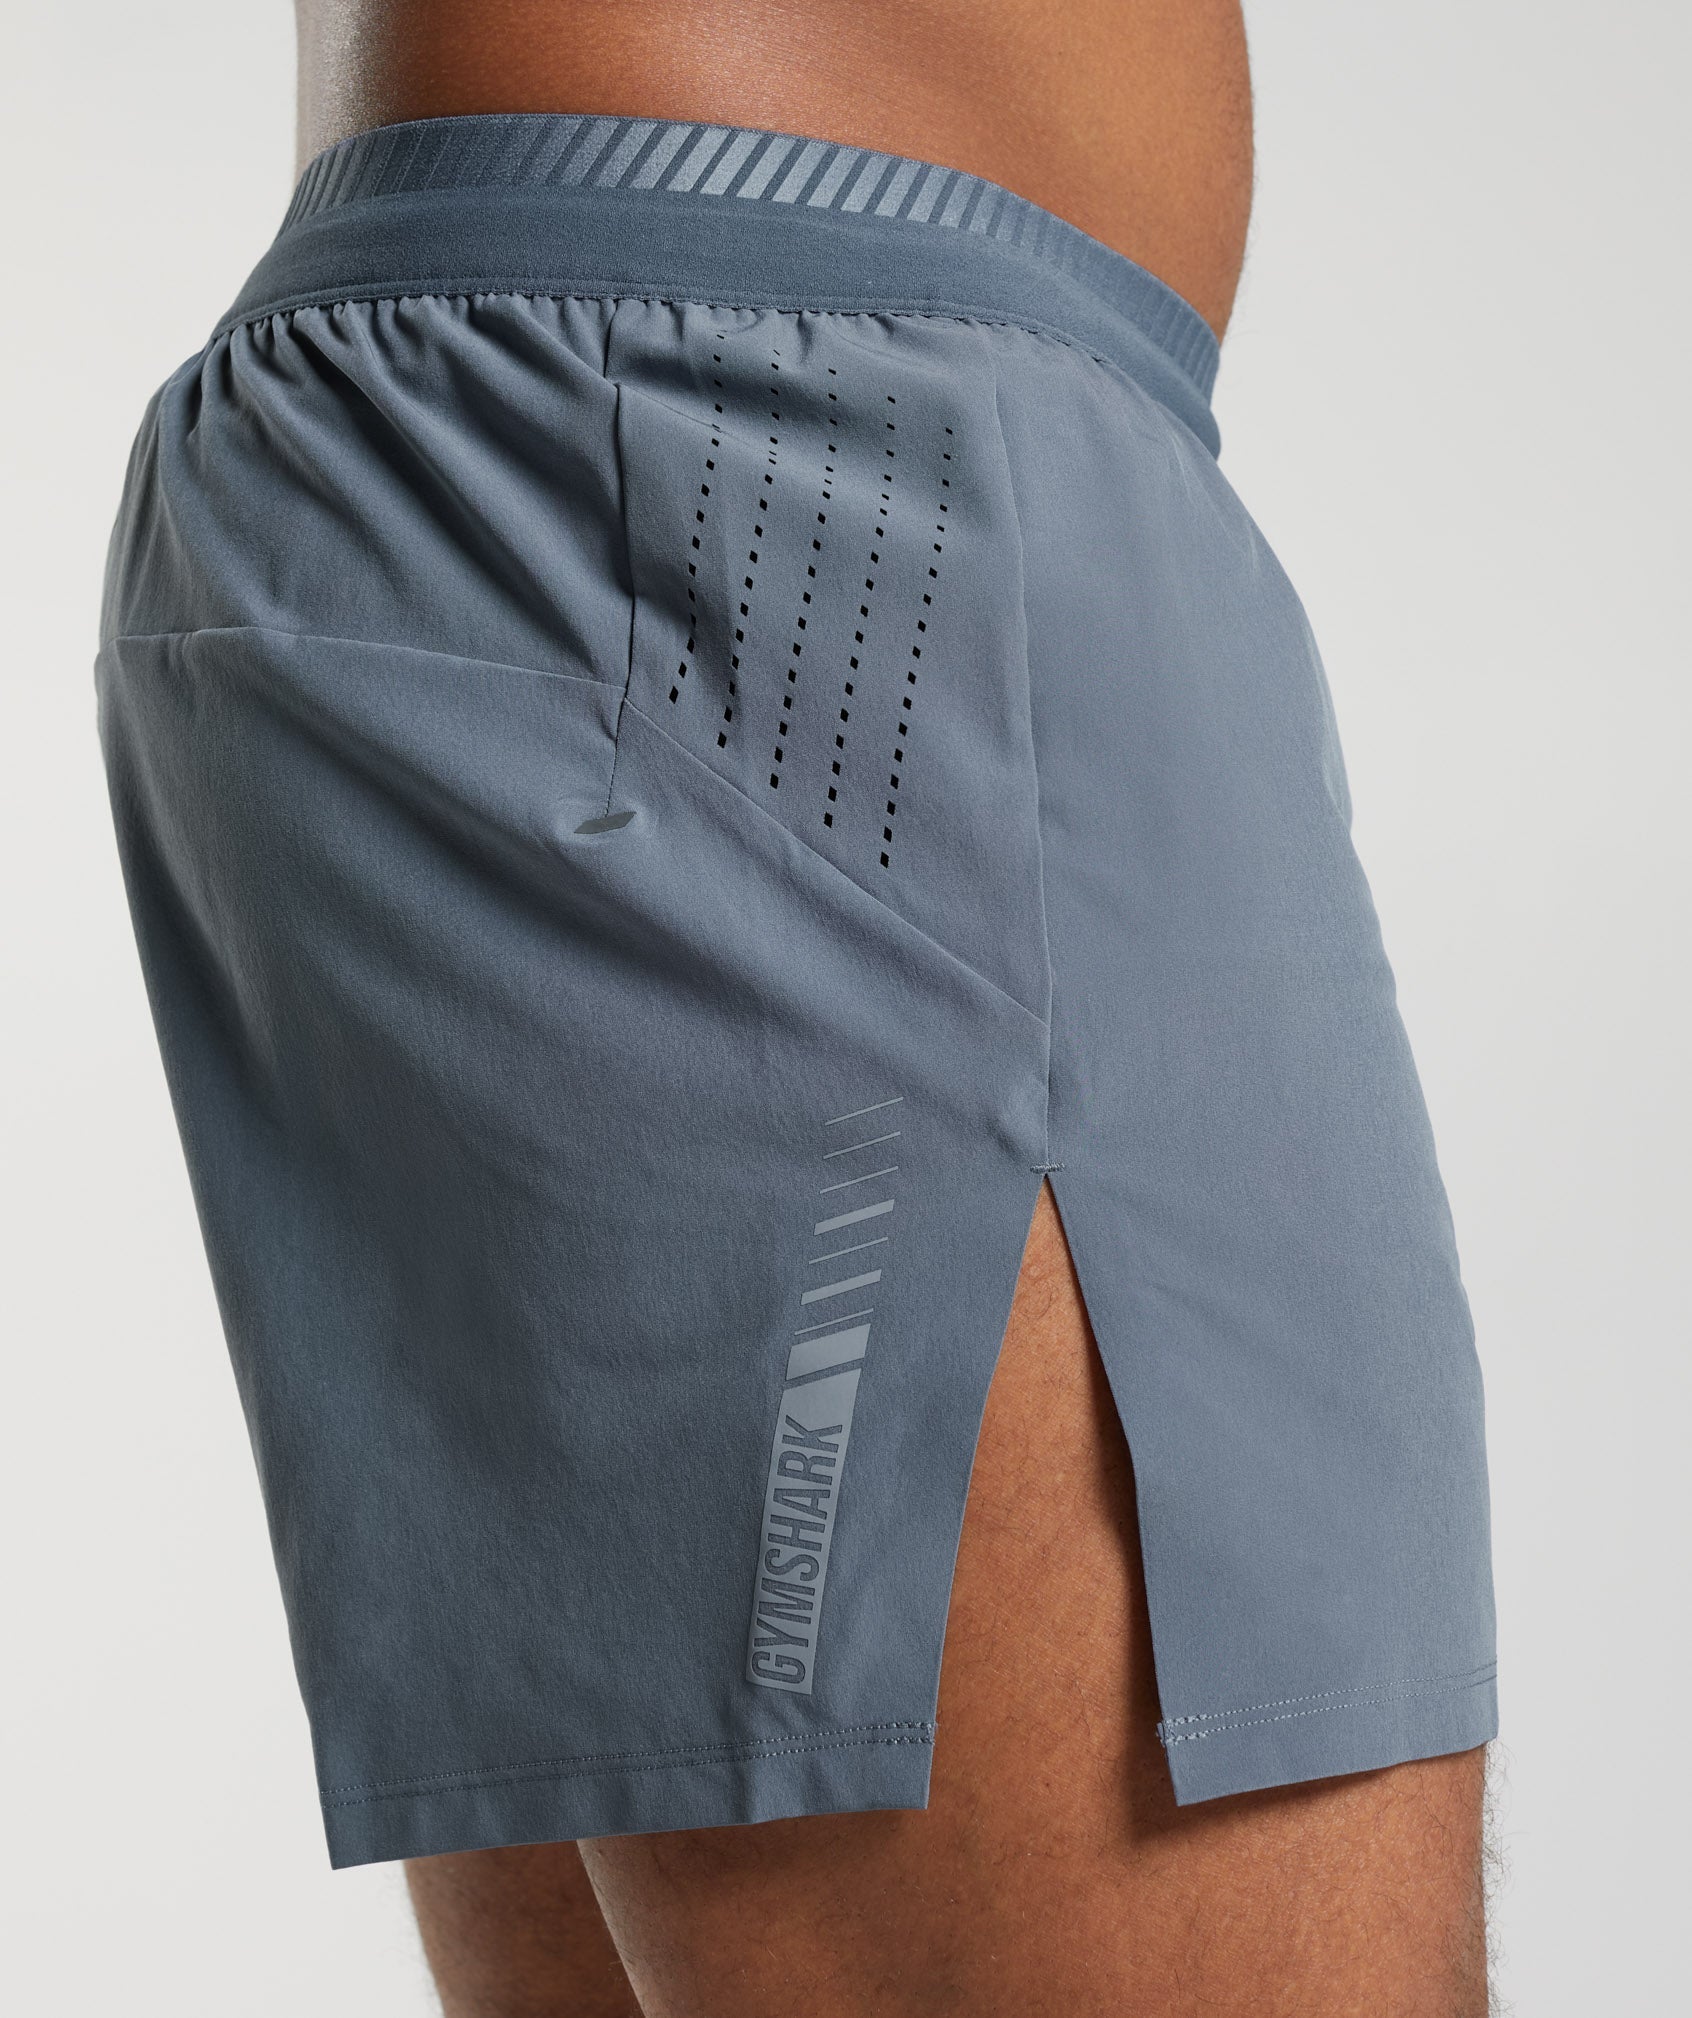 Apex Run 4" Shorts product image 6